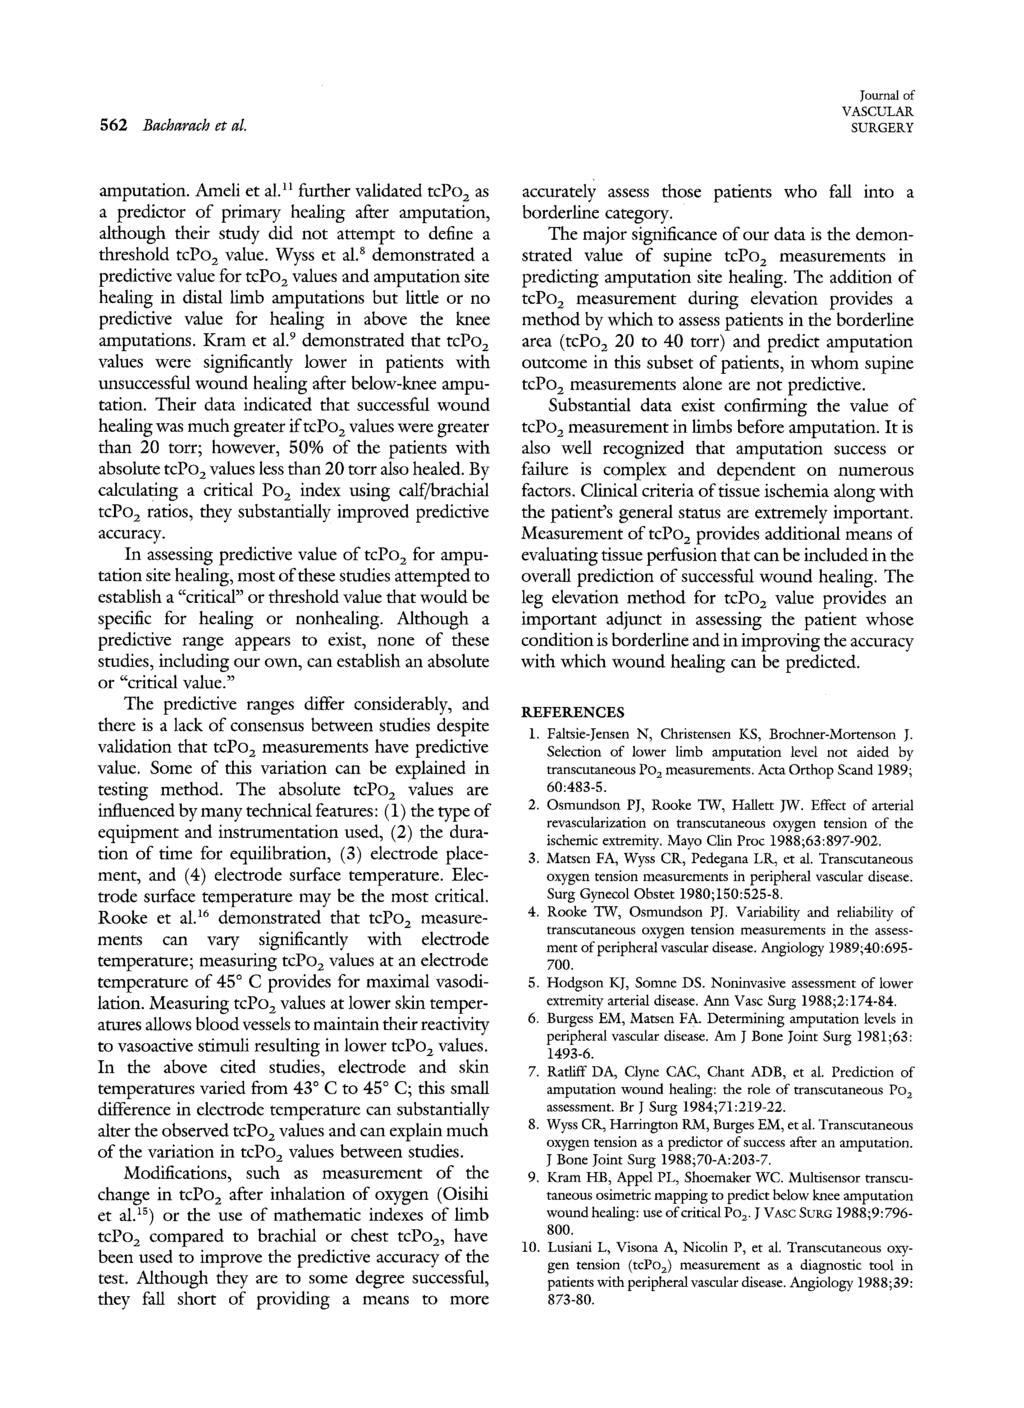 562 Bacharach et al. Journal of VASCULAR SURGERY amputation. Ameli et al.